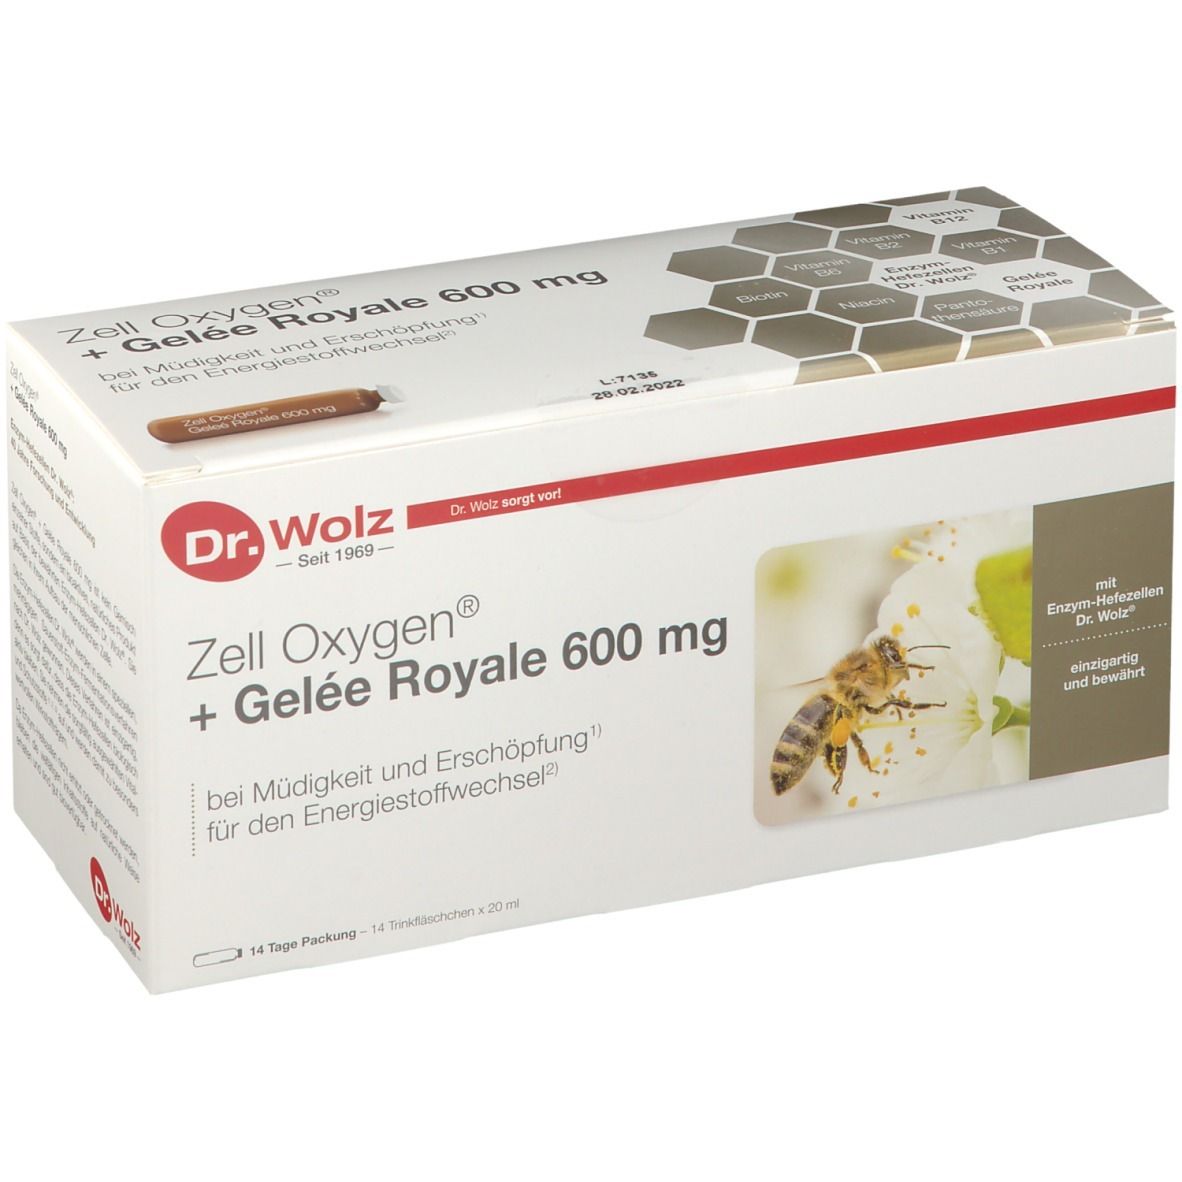 Zell Oxygen® + Gelee Royale 600 mg